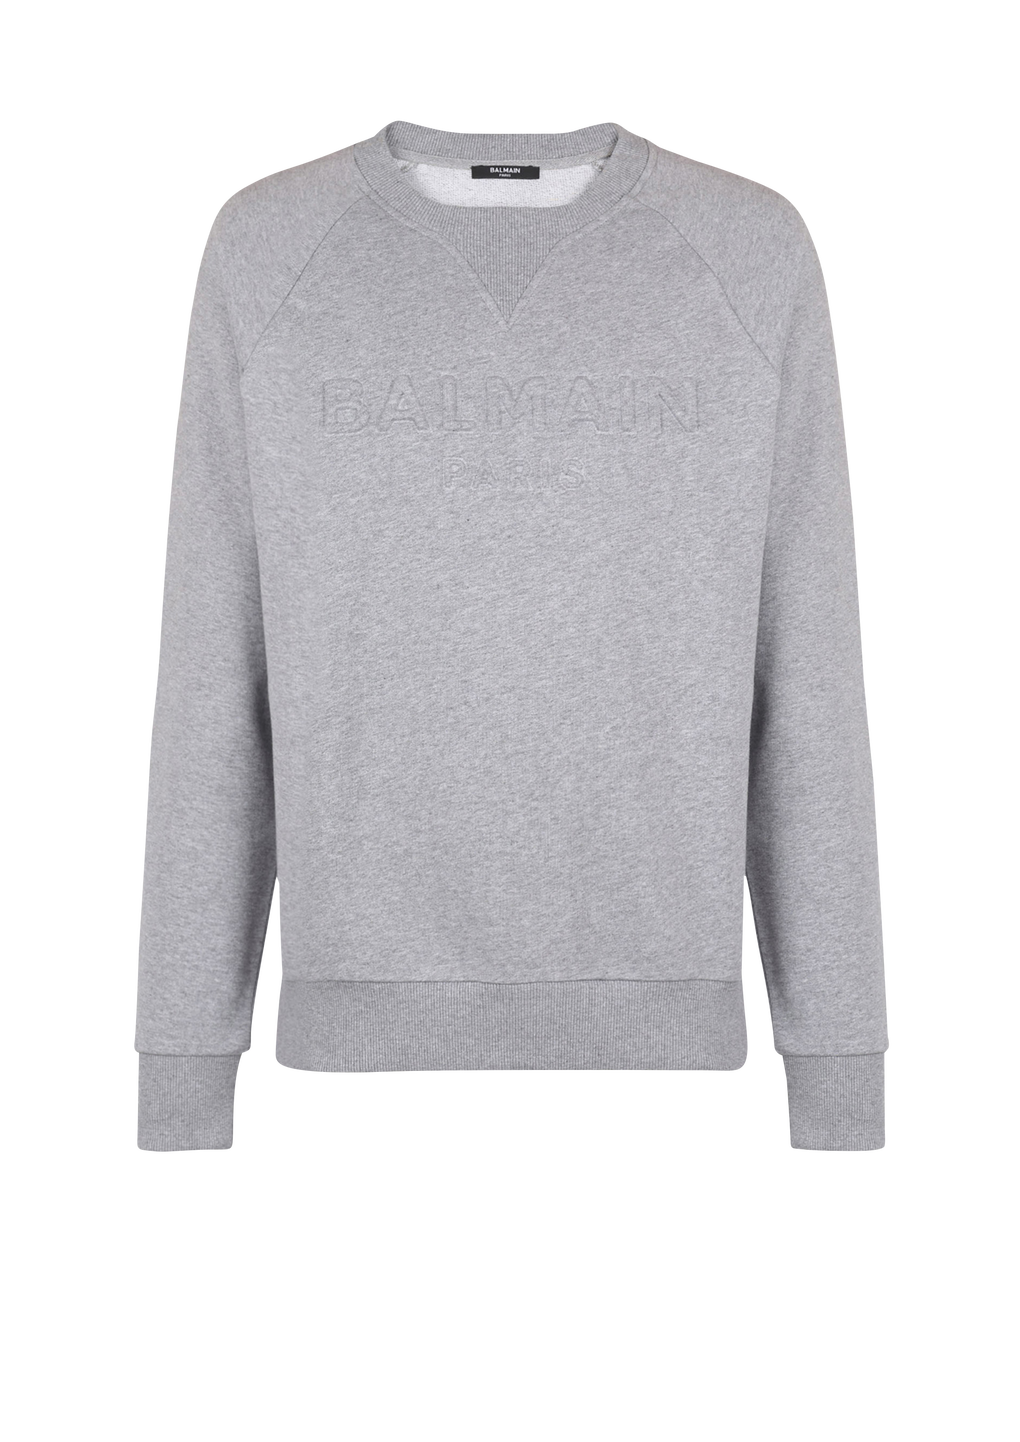 Cotton sweatshirt with embossed Balmain logo, grey, hi-res